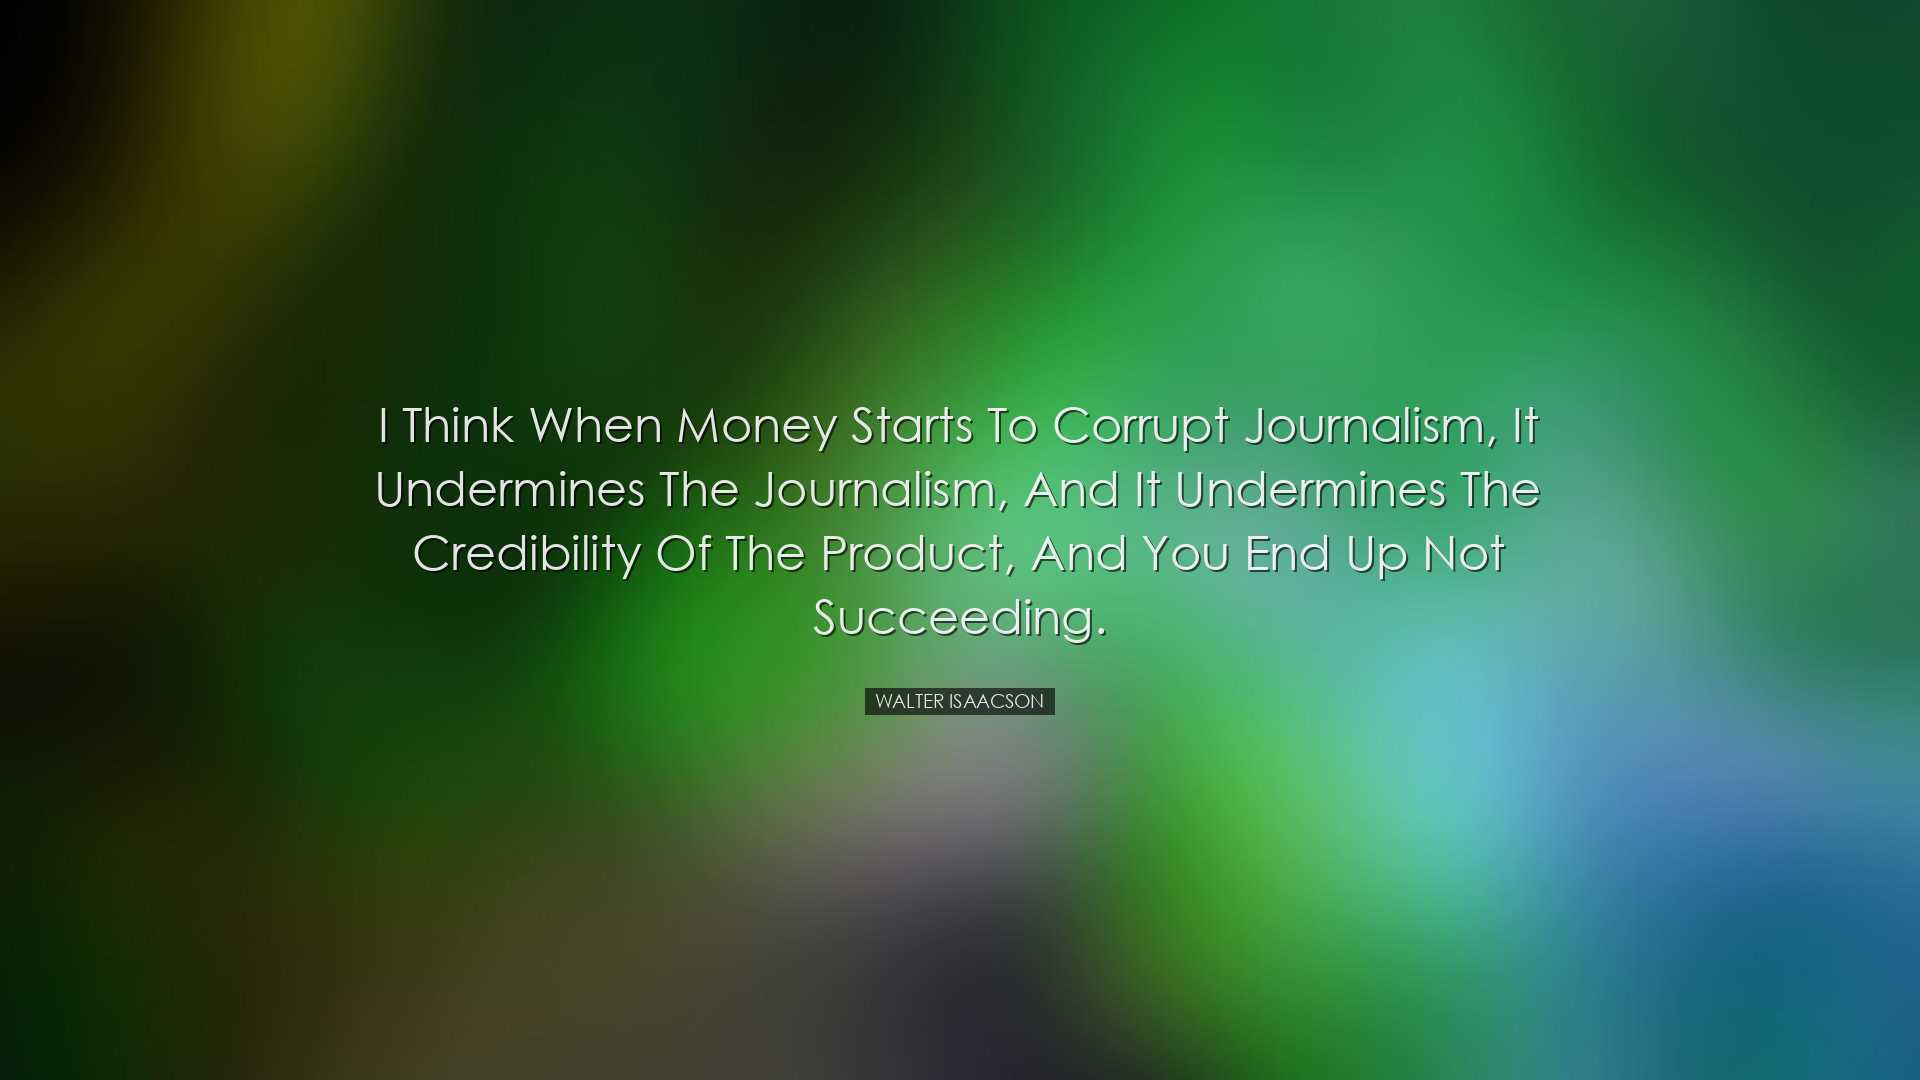 I think when money starts to corrupt journalism, it undermines the